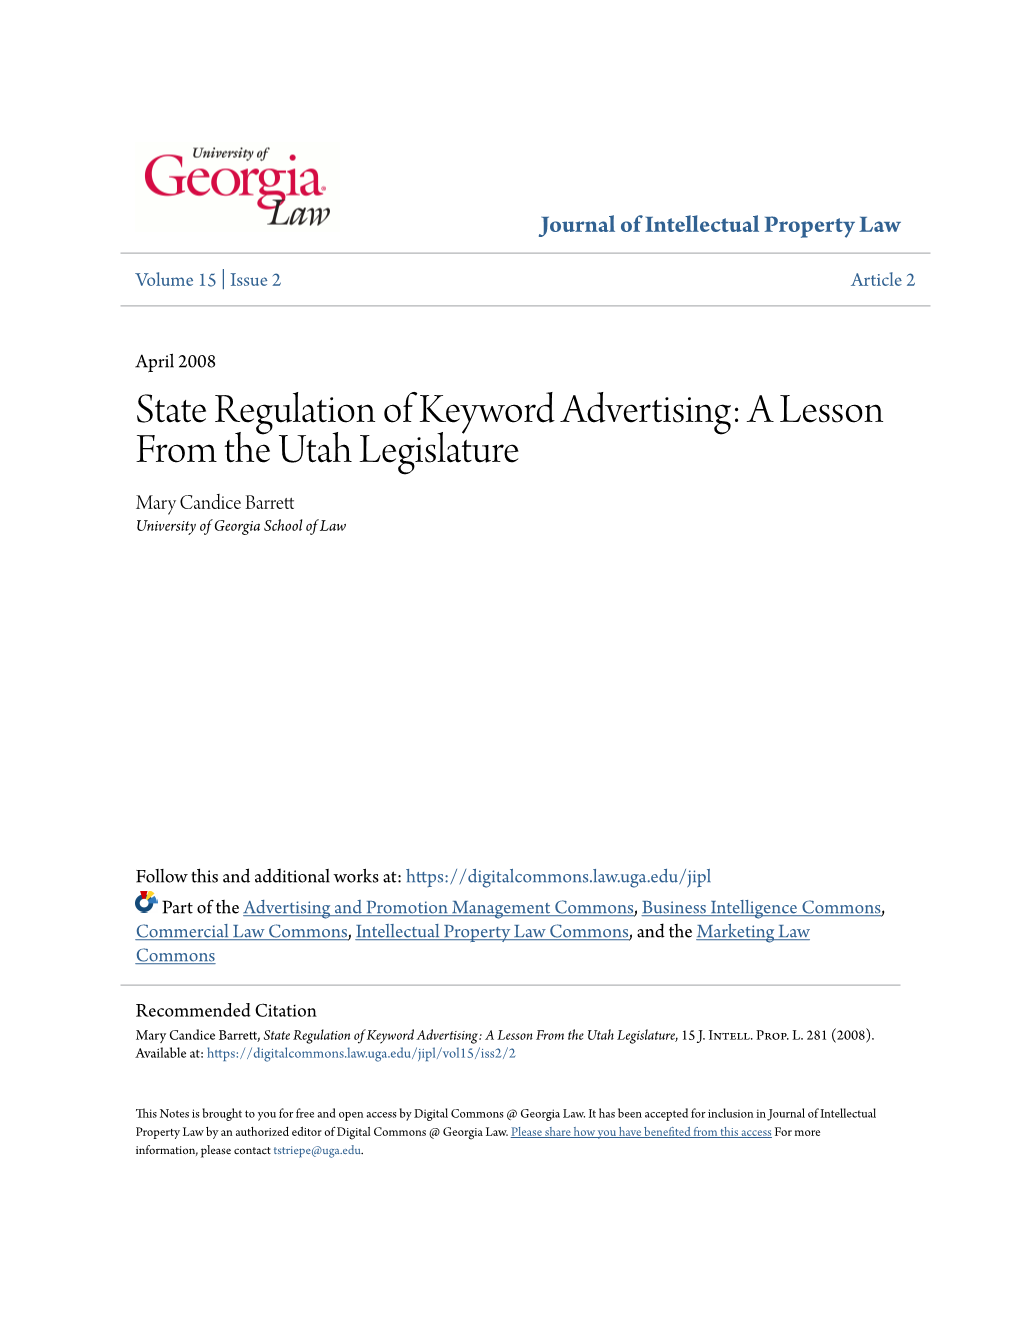 State Regulation of Keyword Advertising: a Lesson from the Utah Legislature Mary Candice Barrett University of Georgia School of Law